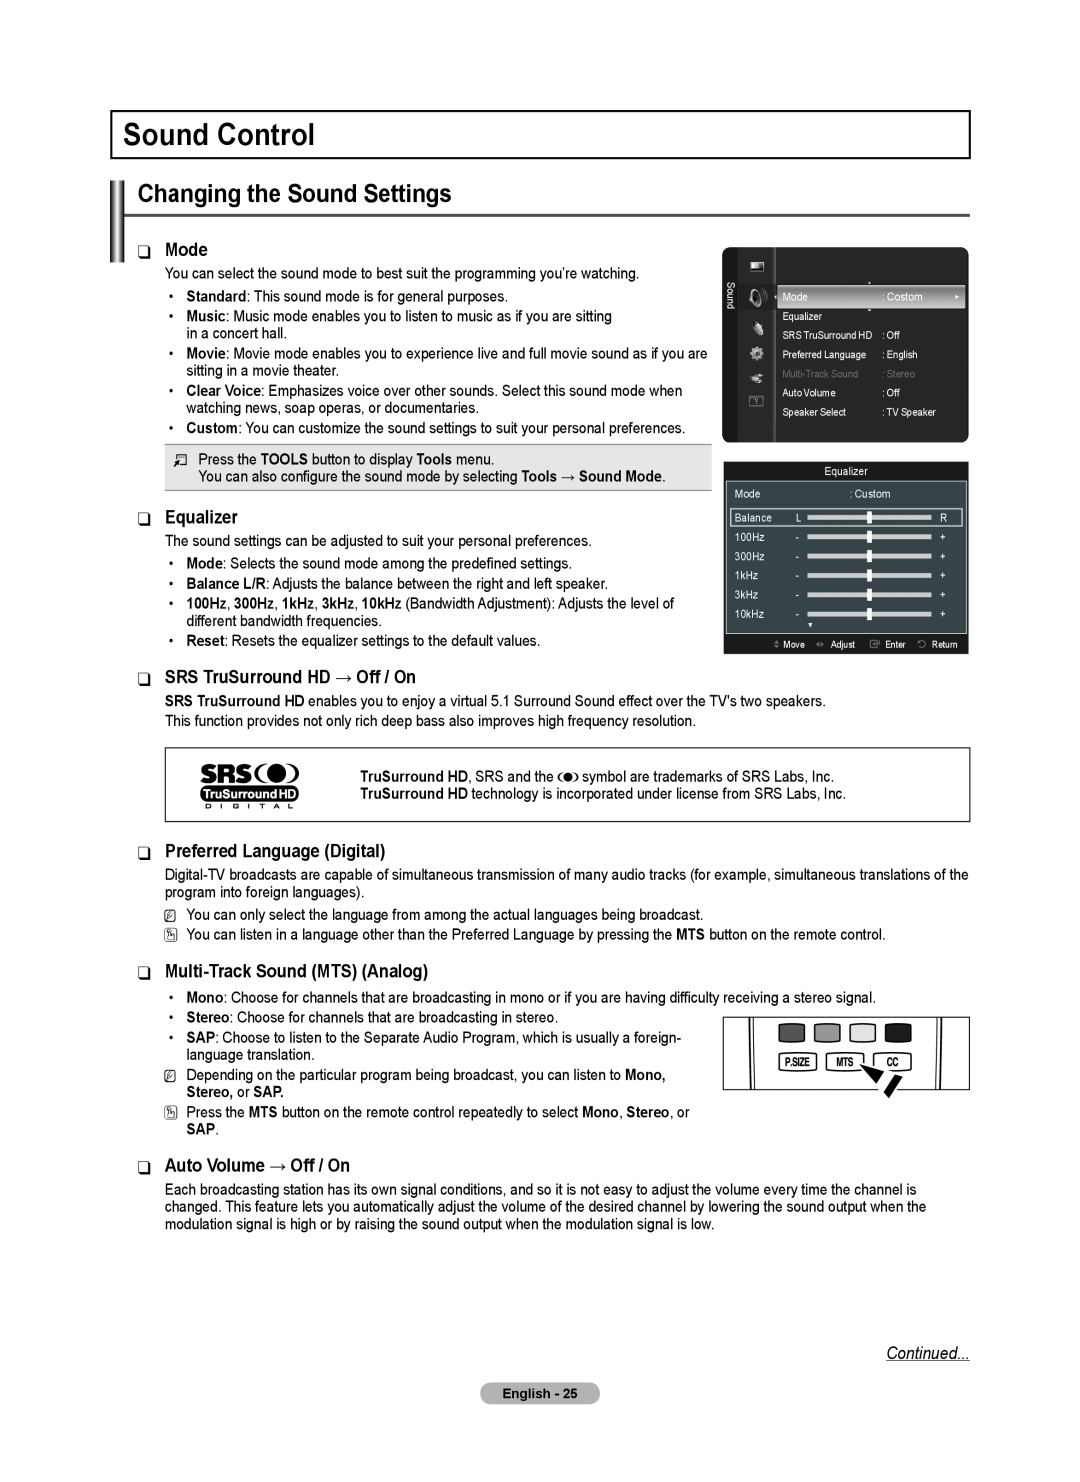 Samsung BN68-02426A-00 Sound Control, Mode, Equalizer, SRS TruSurround HD → Off / On, Preferred Language Digital 